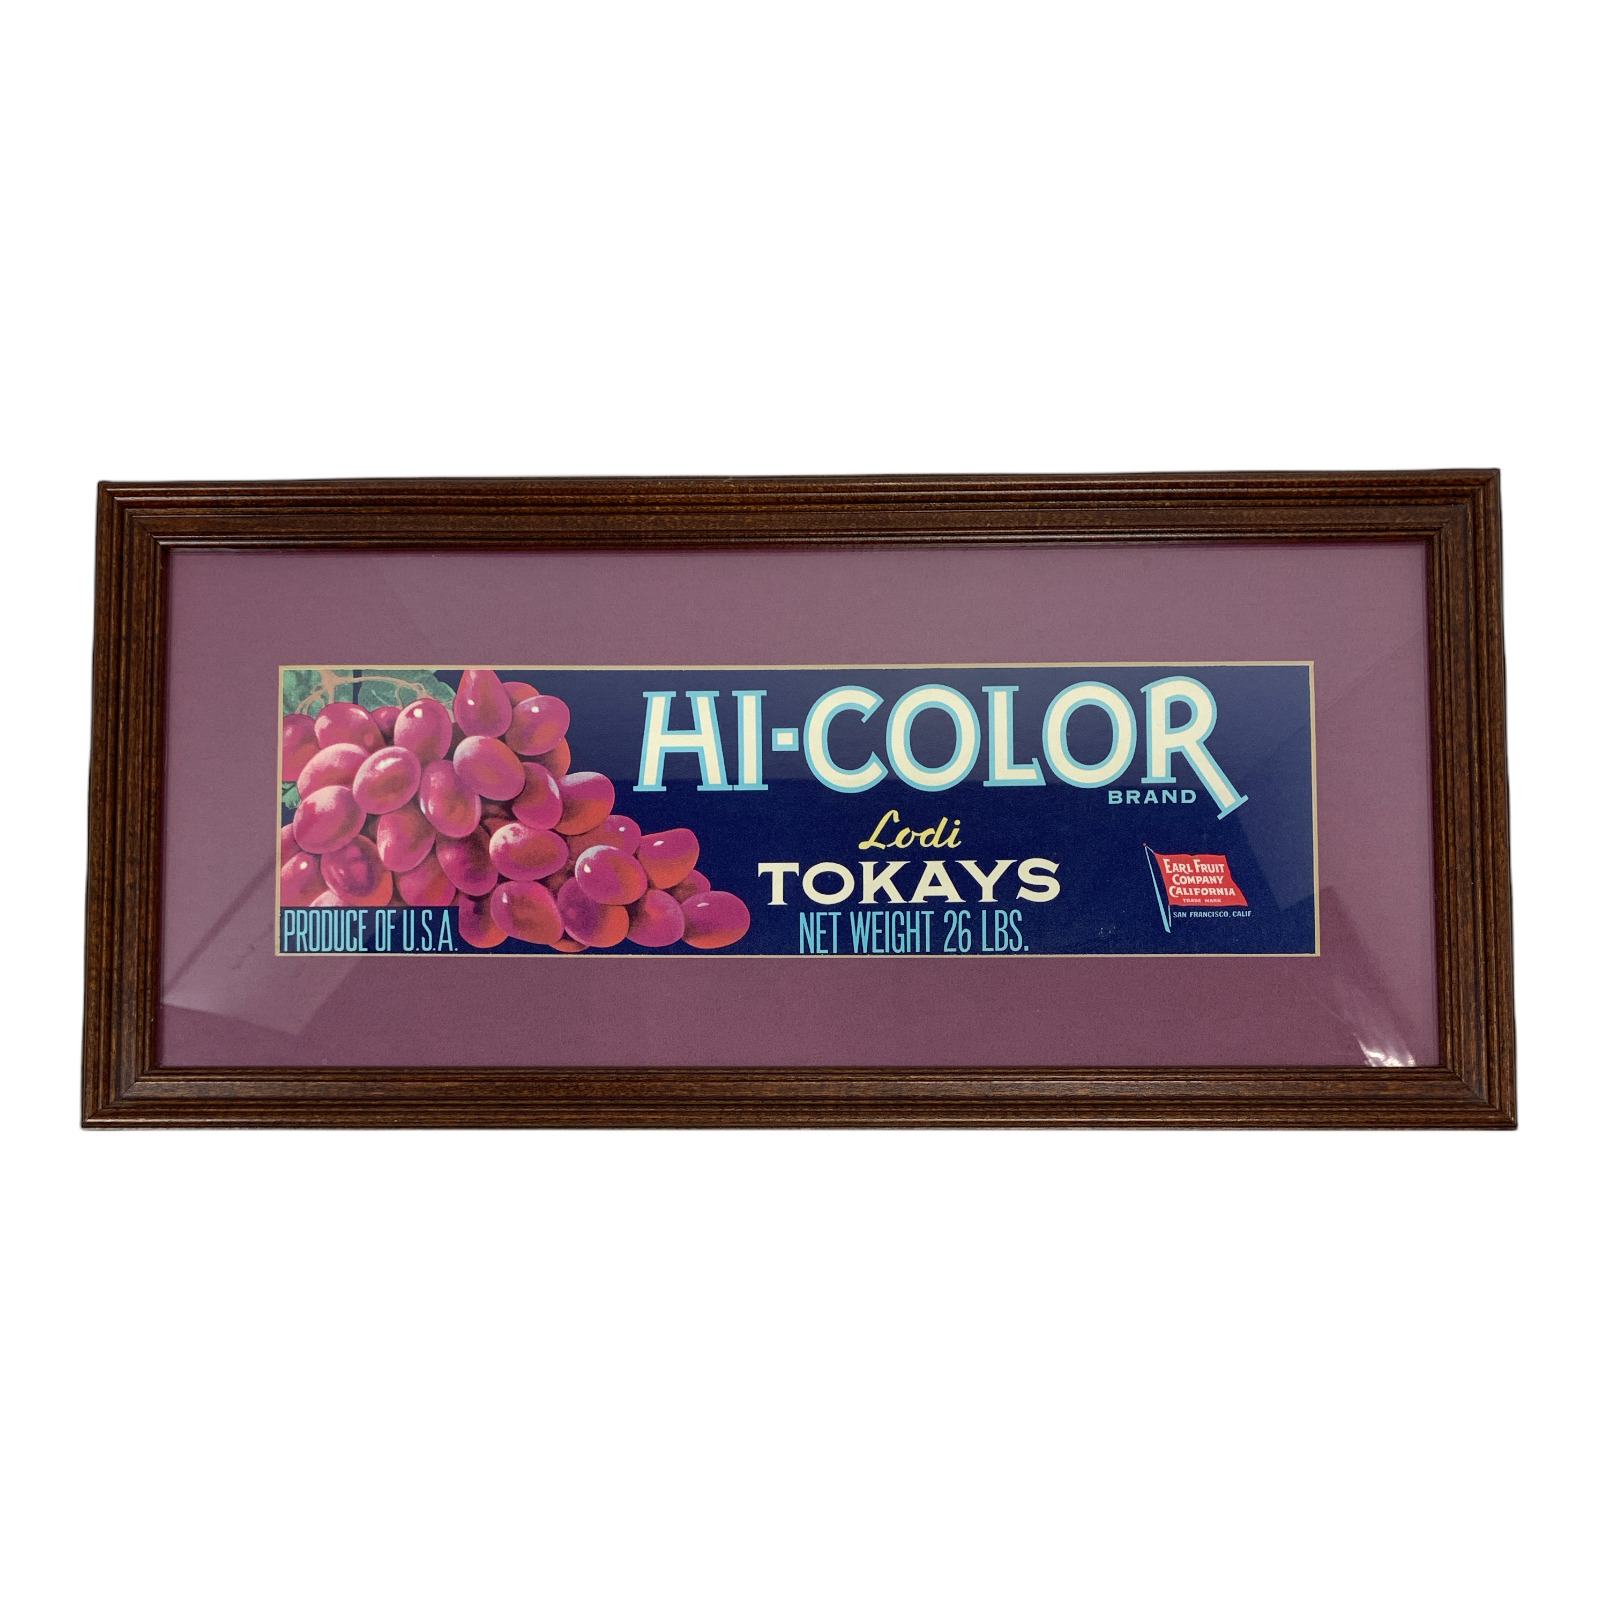 HI-COLOR Brand, Vintage Lodi Tokay Grapes AN ORIGINAL GRAPE CRATE LABEL Framed